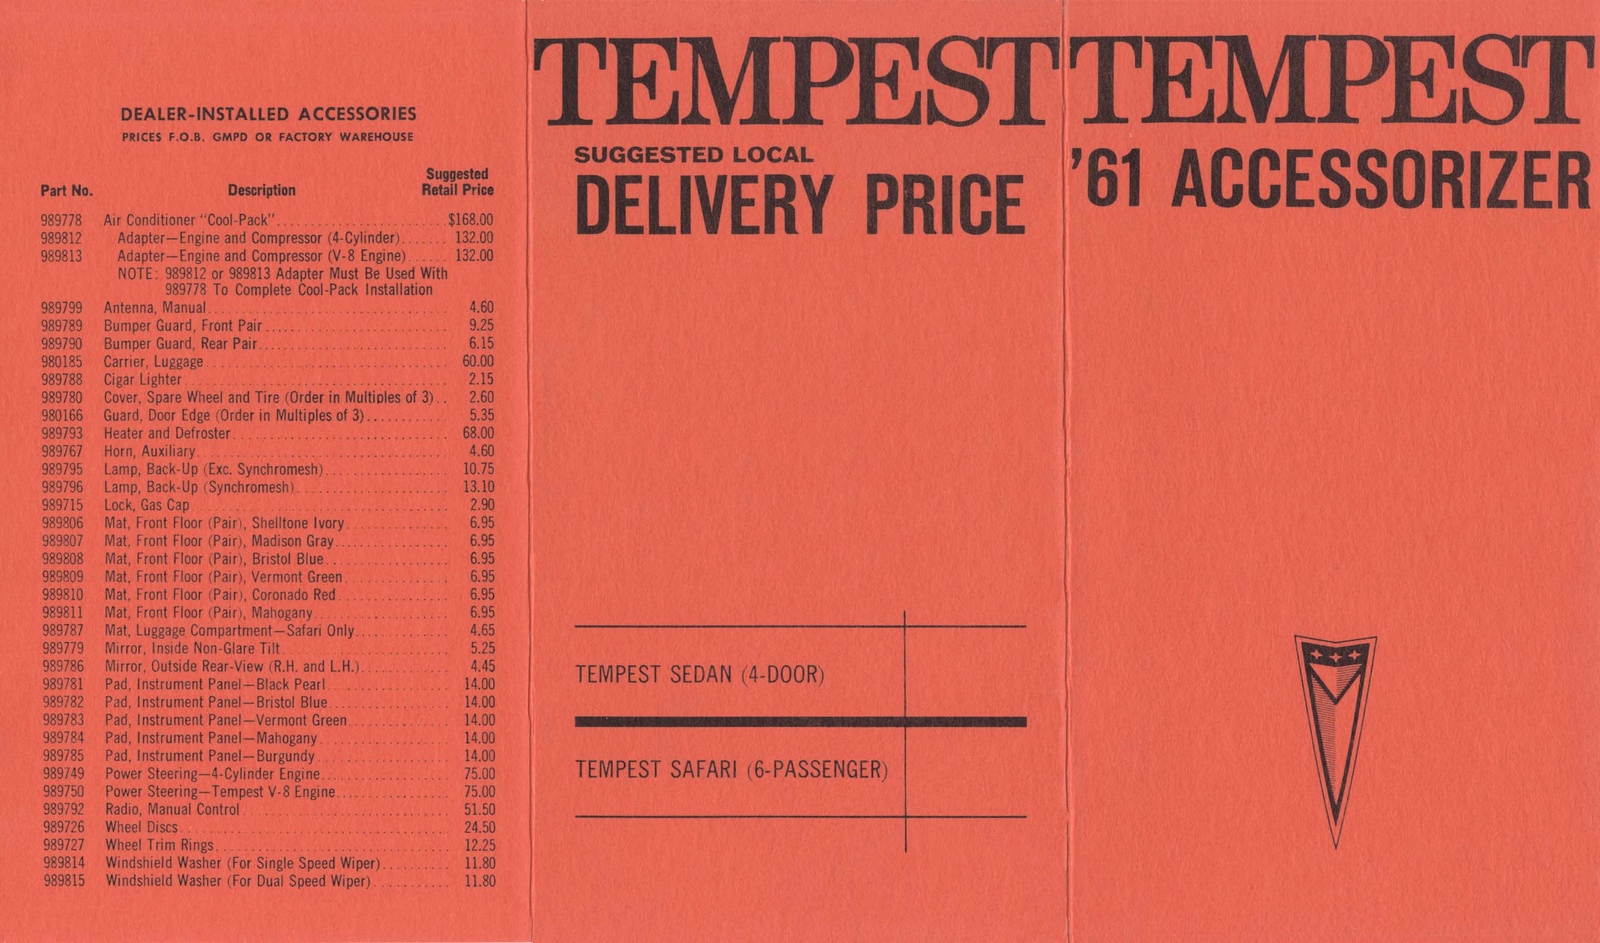 n_1961 Pontiac Tempest Accessorizer-01.jpg